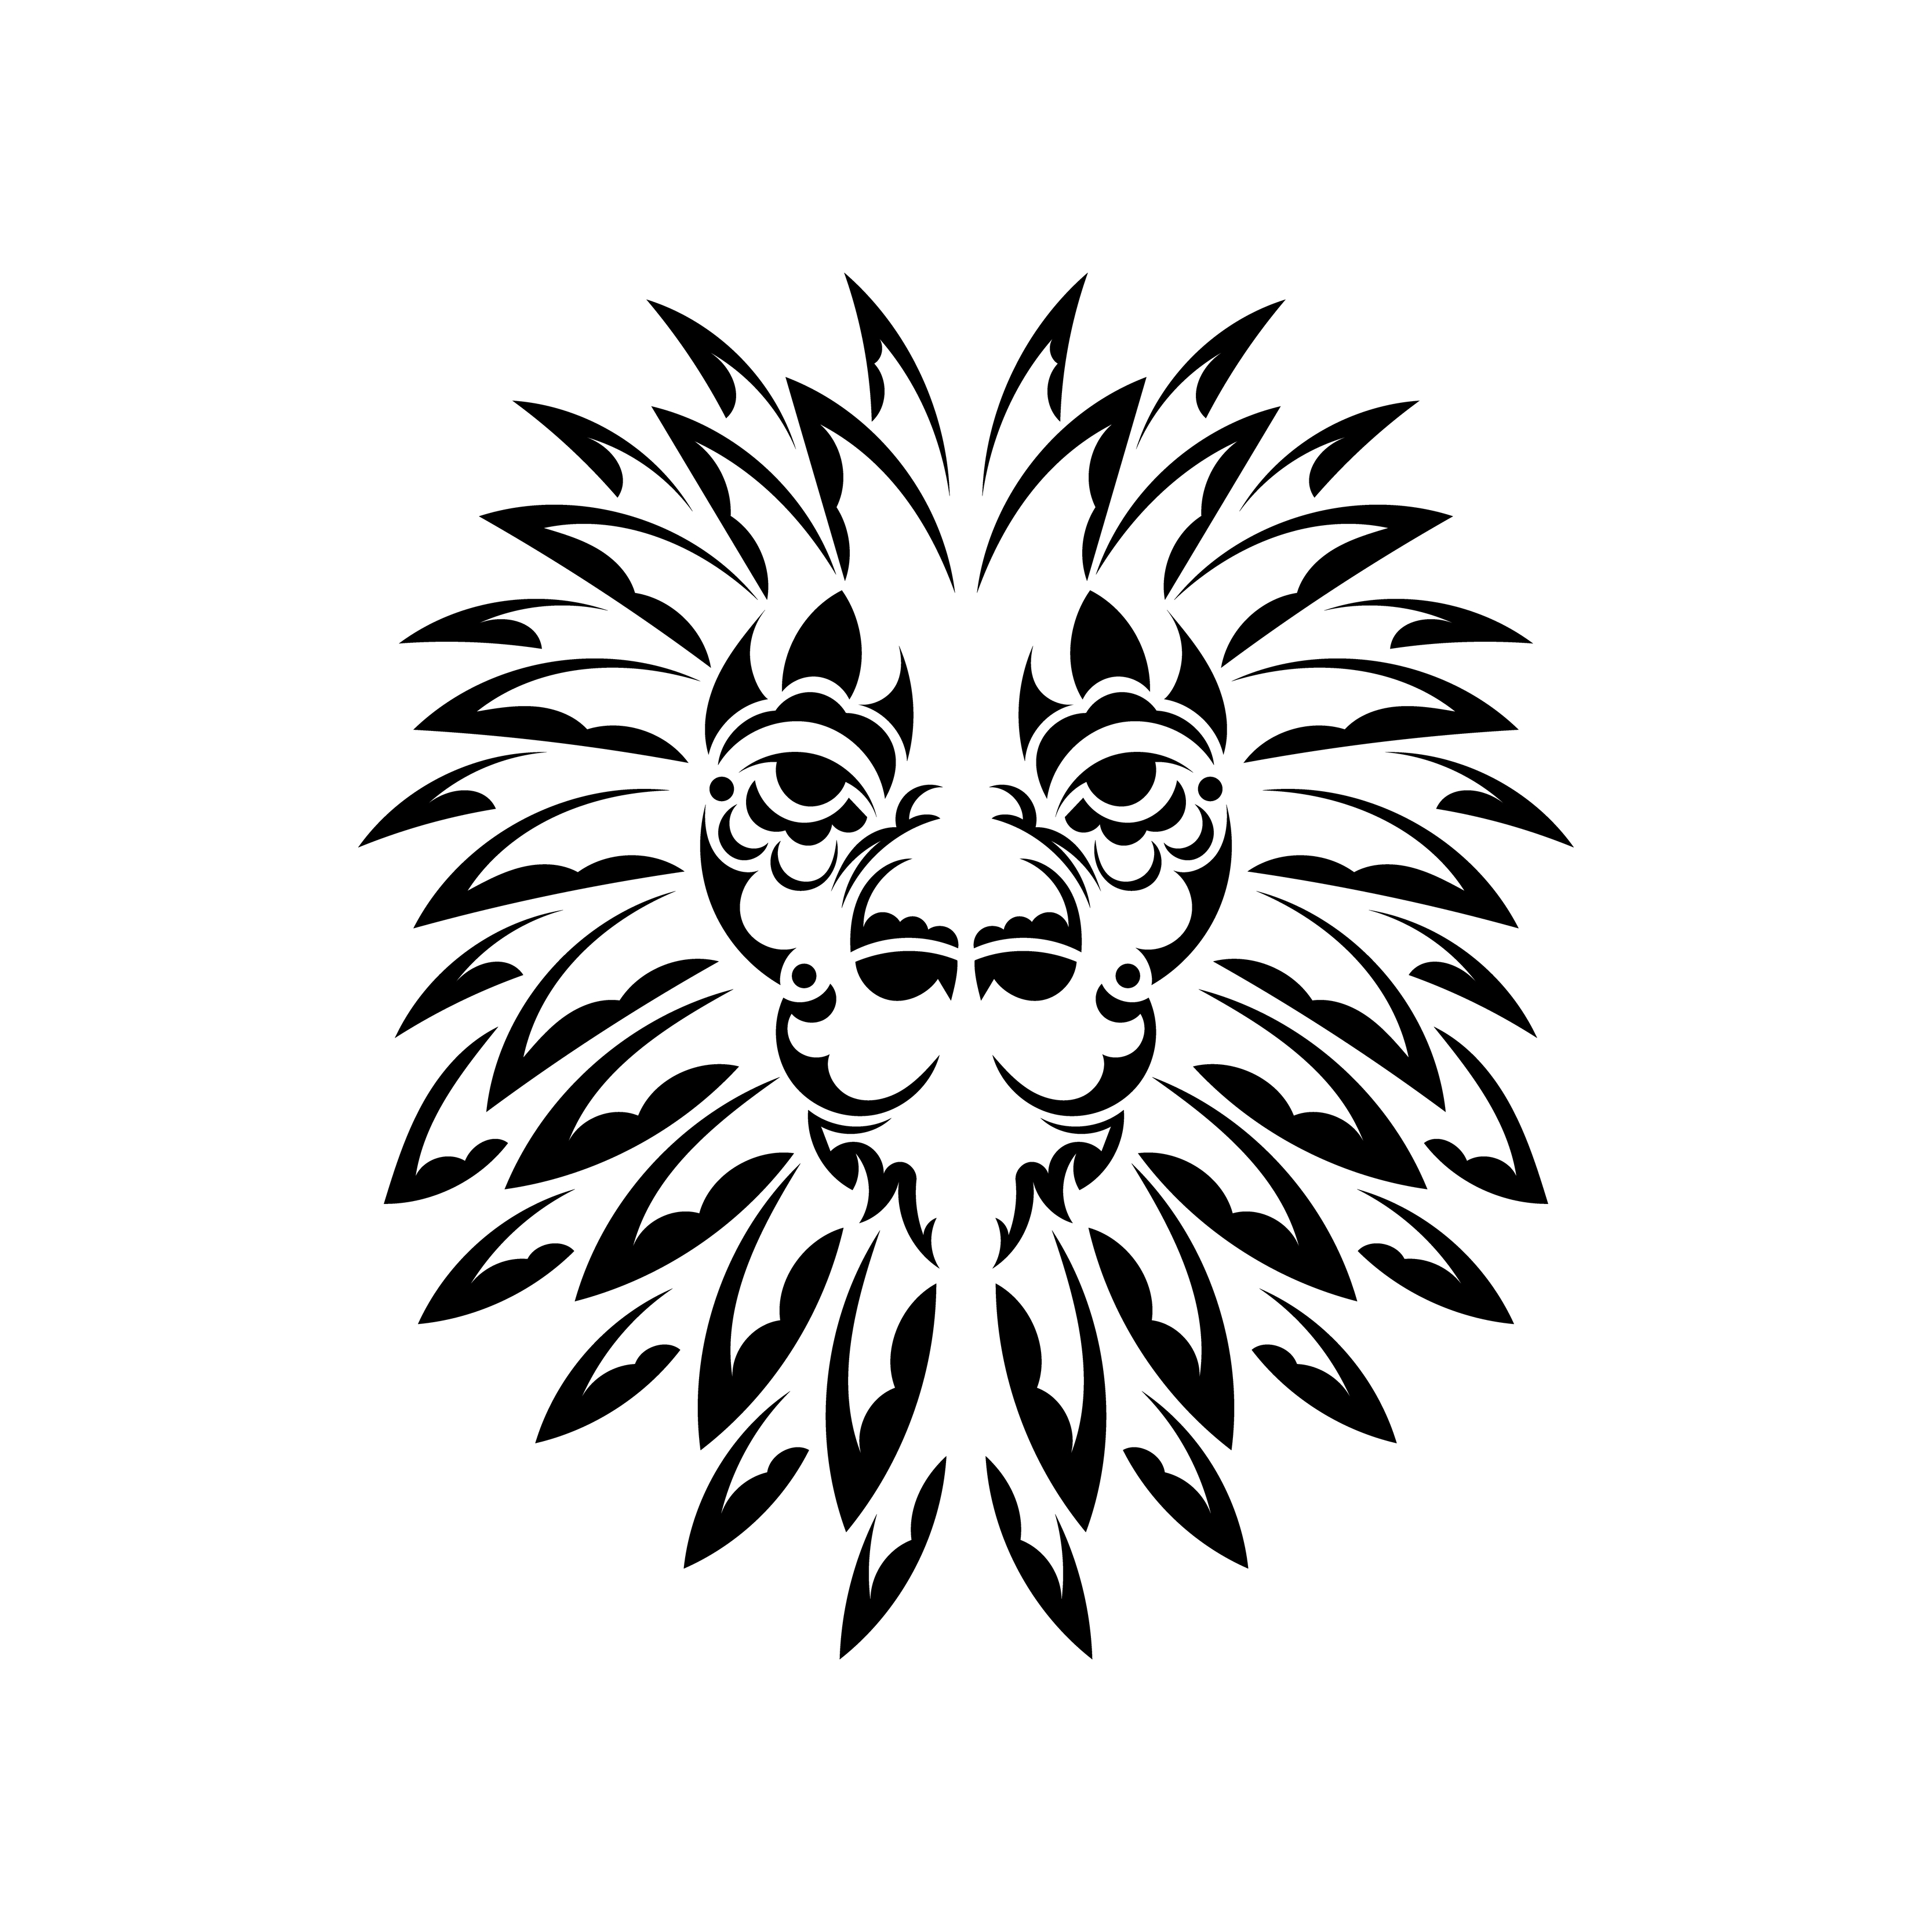 Maori Tattoo Design Idea For Tattoo Stock Illustration - Download Image Now  - Abstract, Animal, Art - iStock